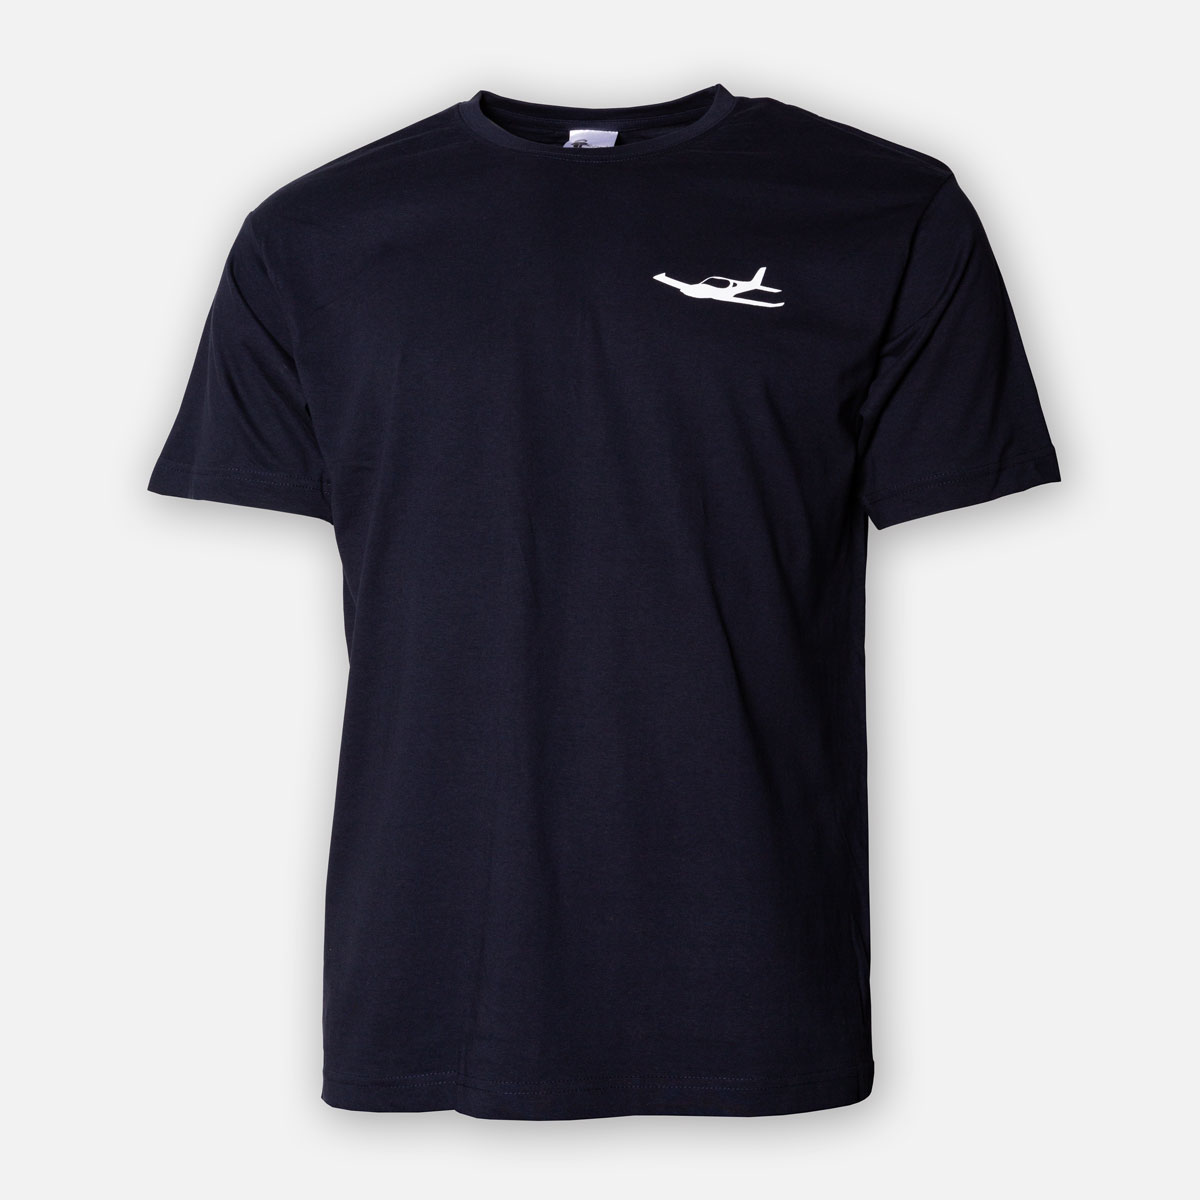 BRISTELL T-shirt with aeroplane blue